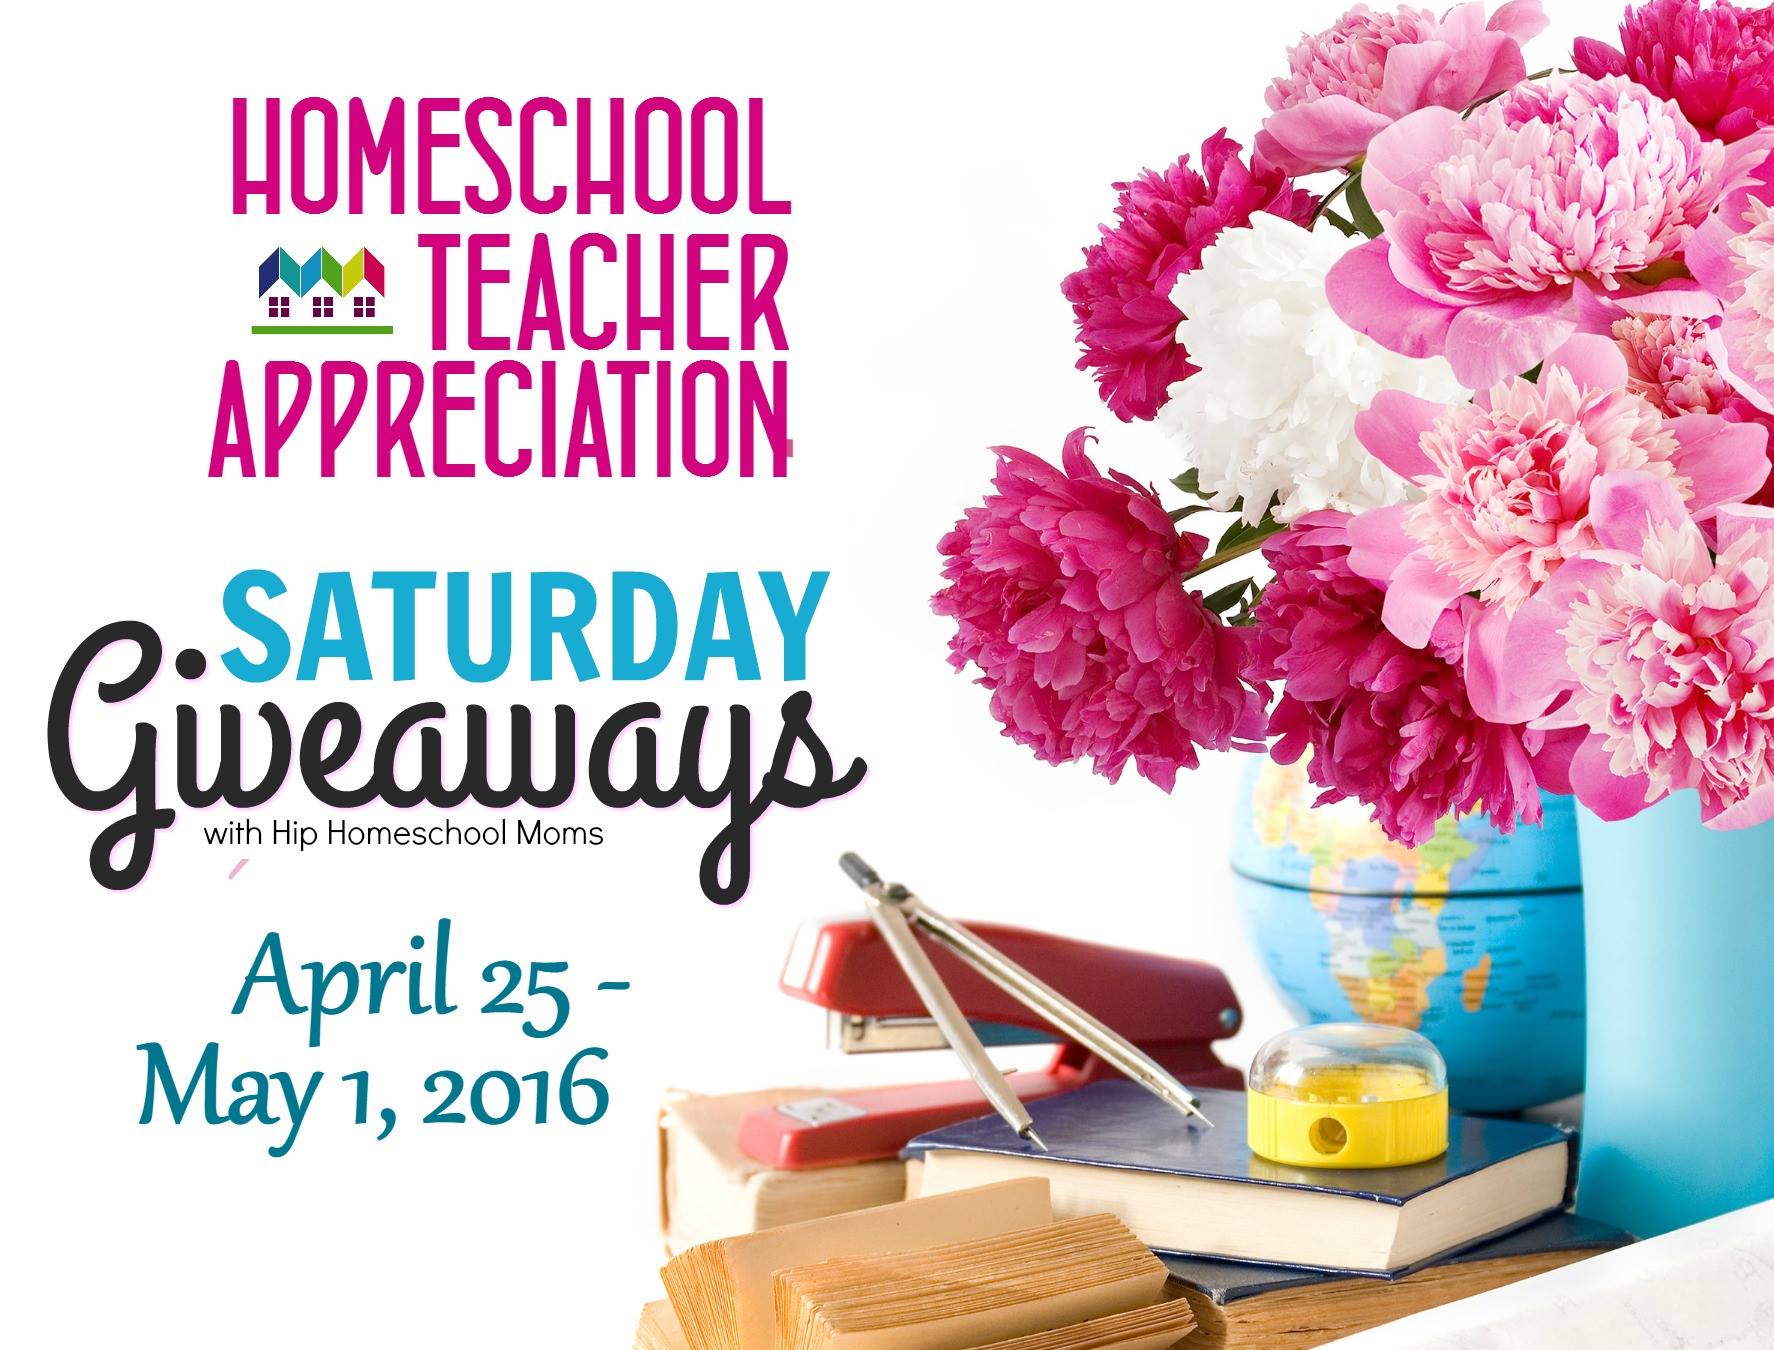 Saturday’s Giveaways for Homeschool Teacher Appreciation Week